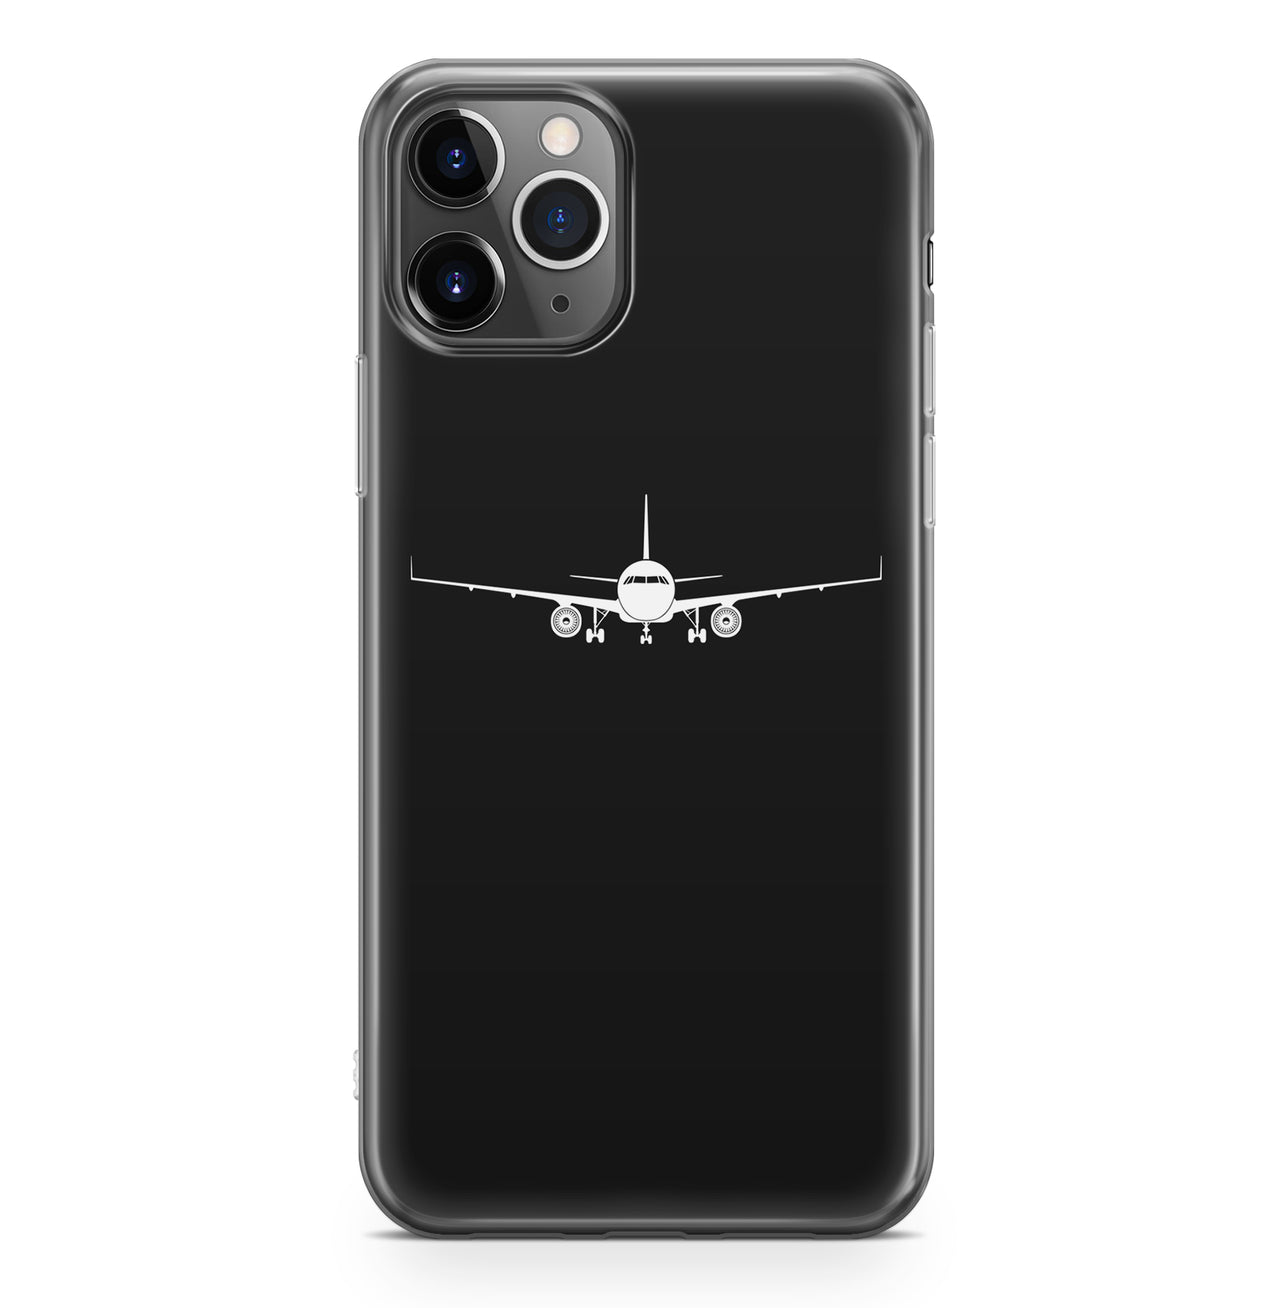 Airbus A320 Silhouette Designed iPhone Cases